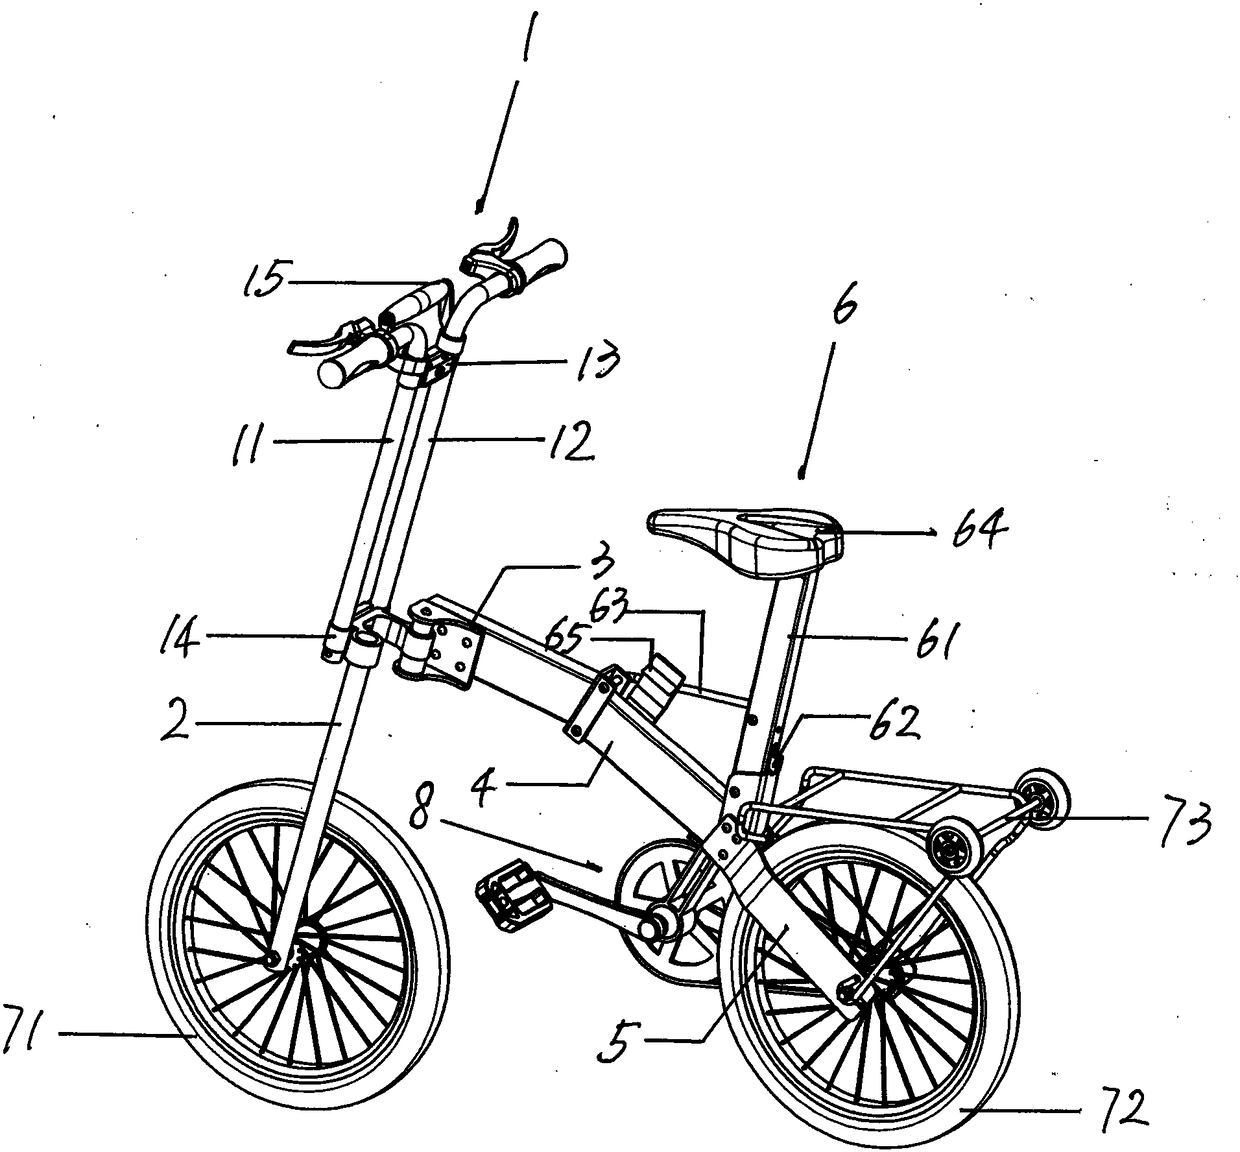 Telescopic handle type fast folding bicycle